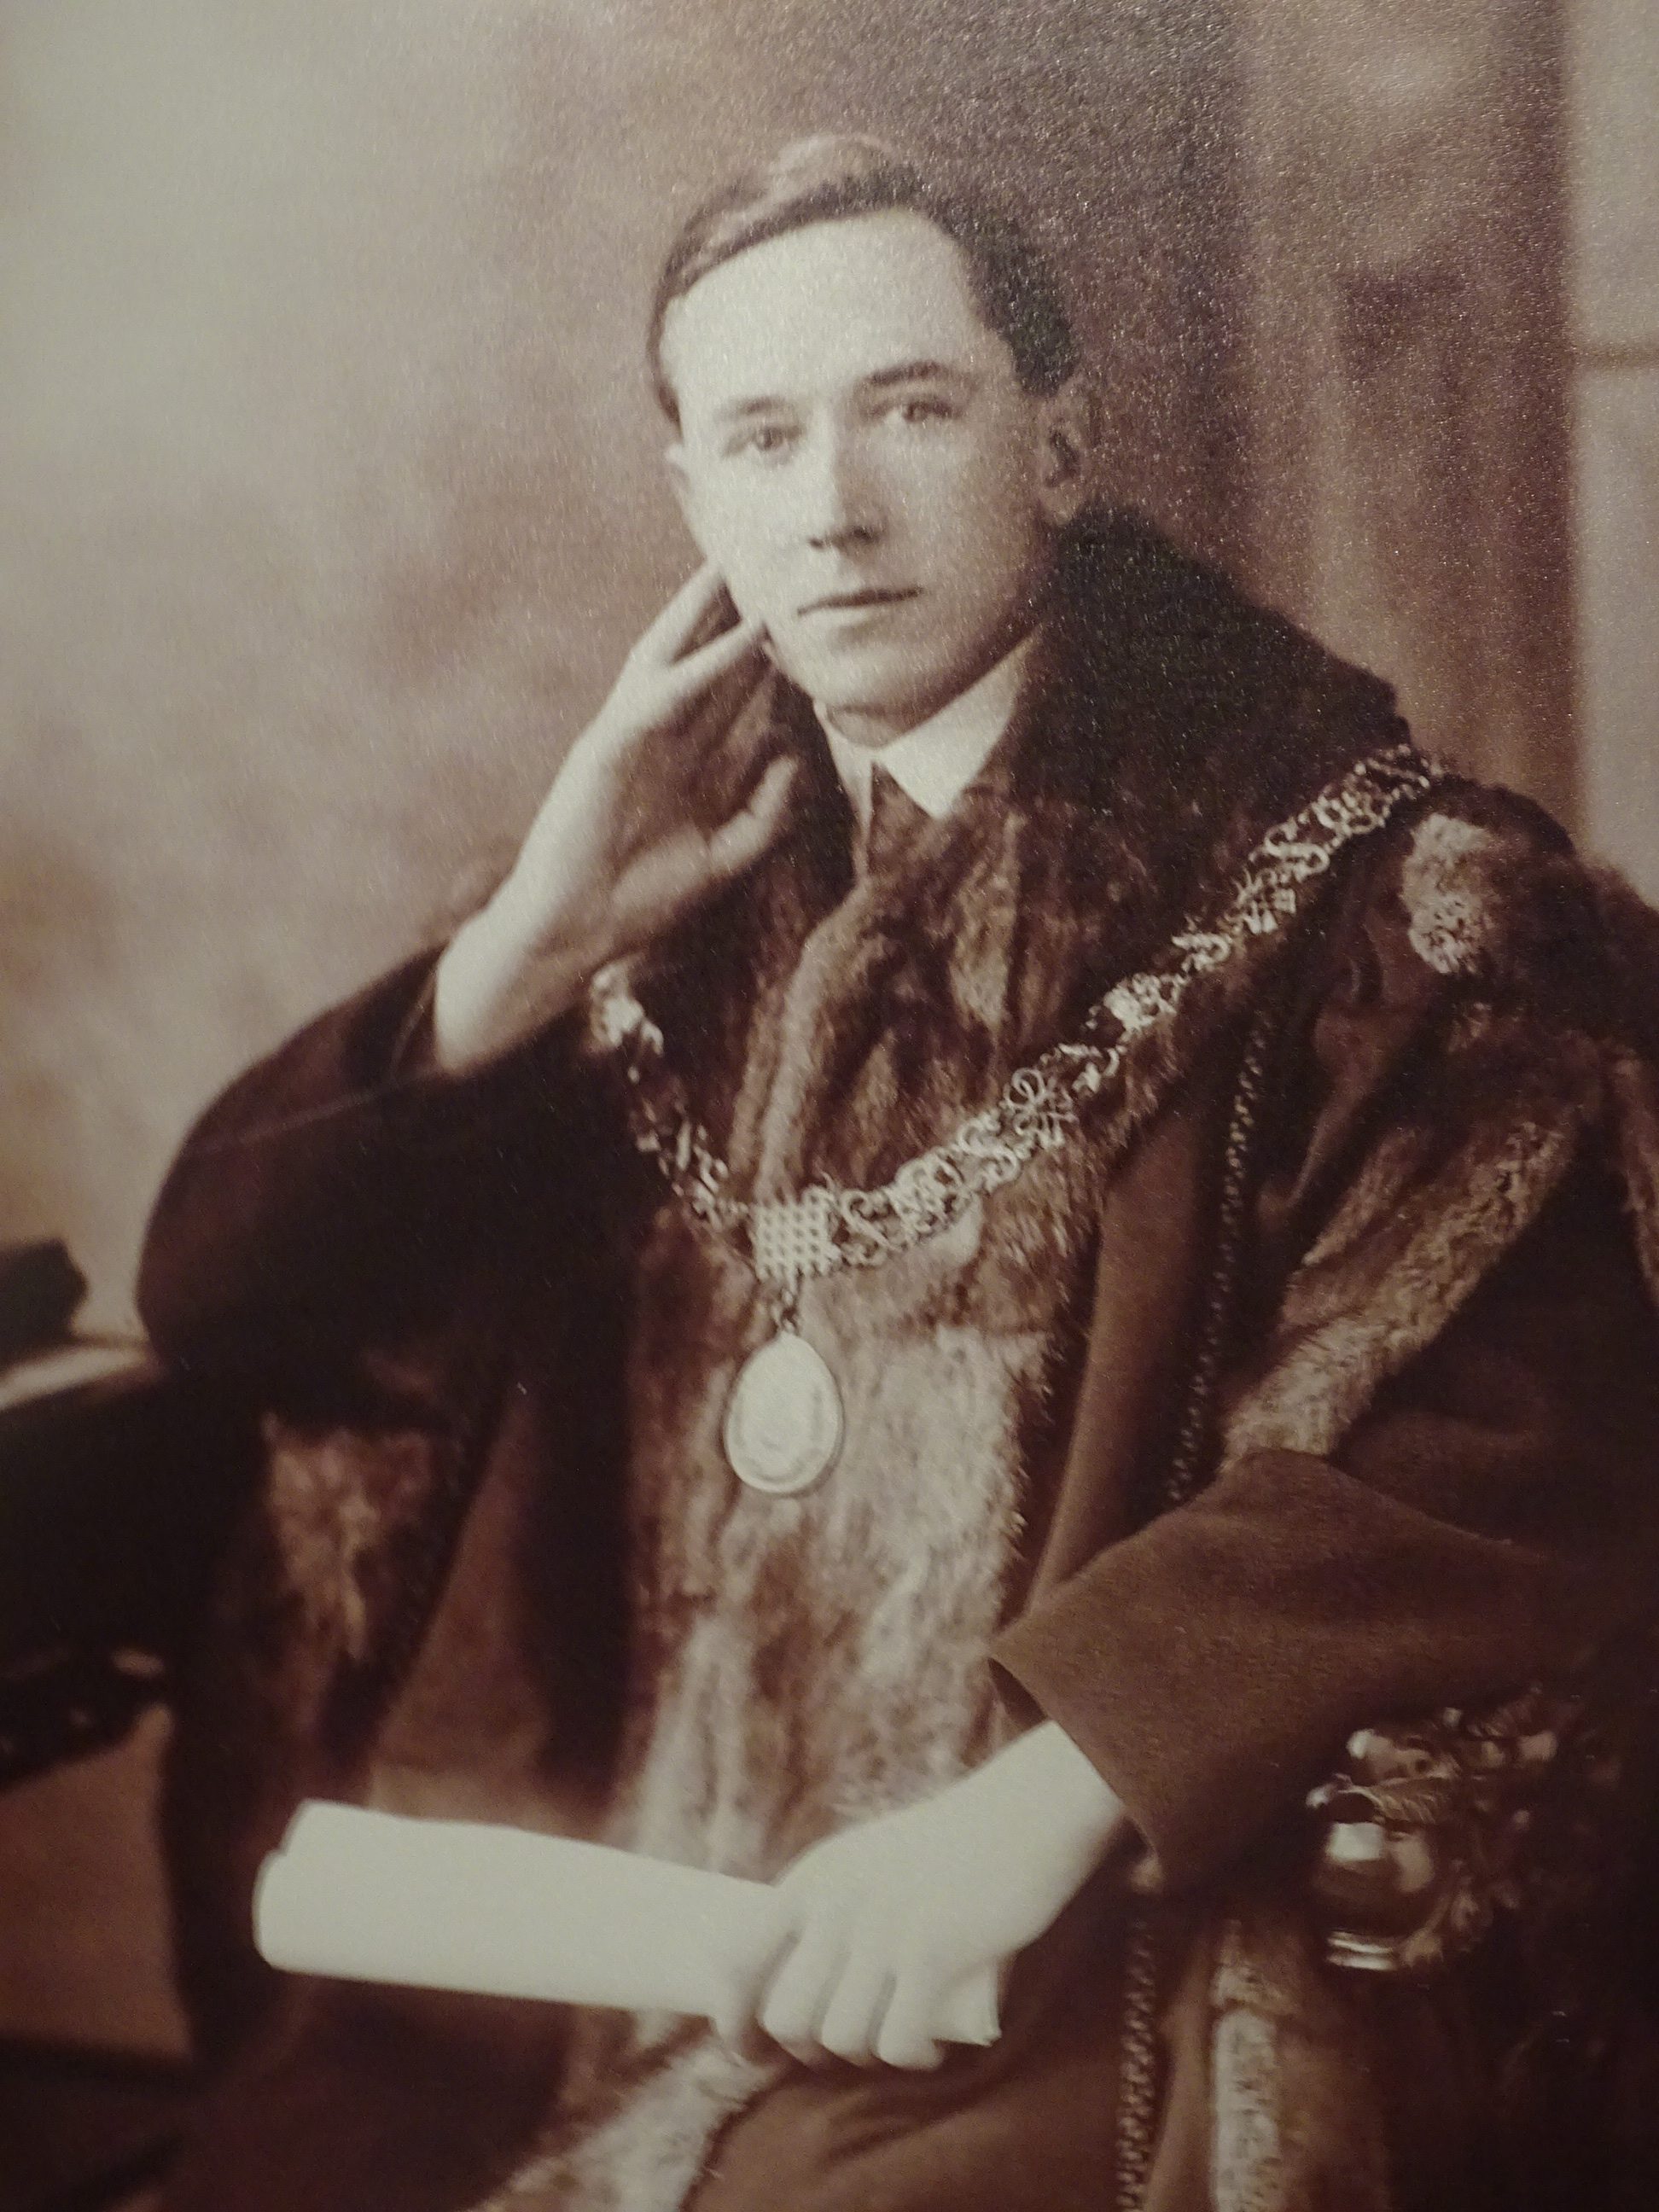 1083a. Lord Mayor of Cork Cllr Donal Óg O'Callaghan, 1920 (source: Cork Public Museum).